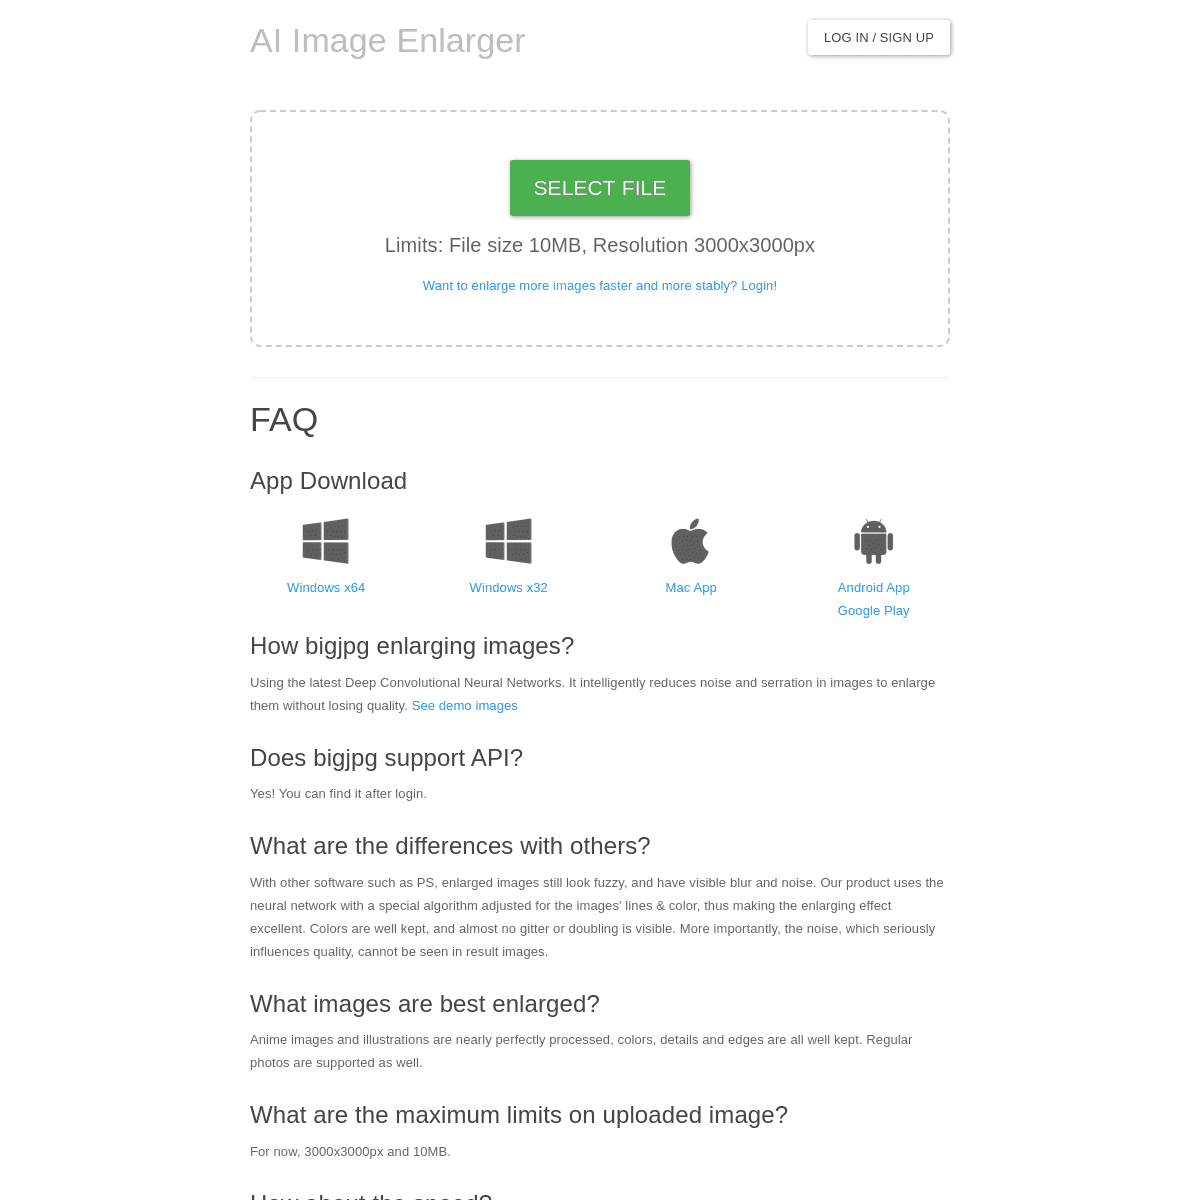 A complete backup of bigjpg.com